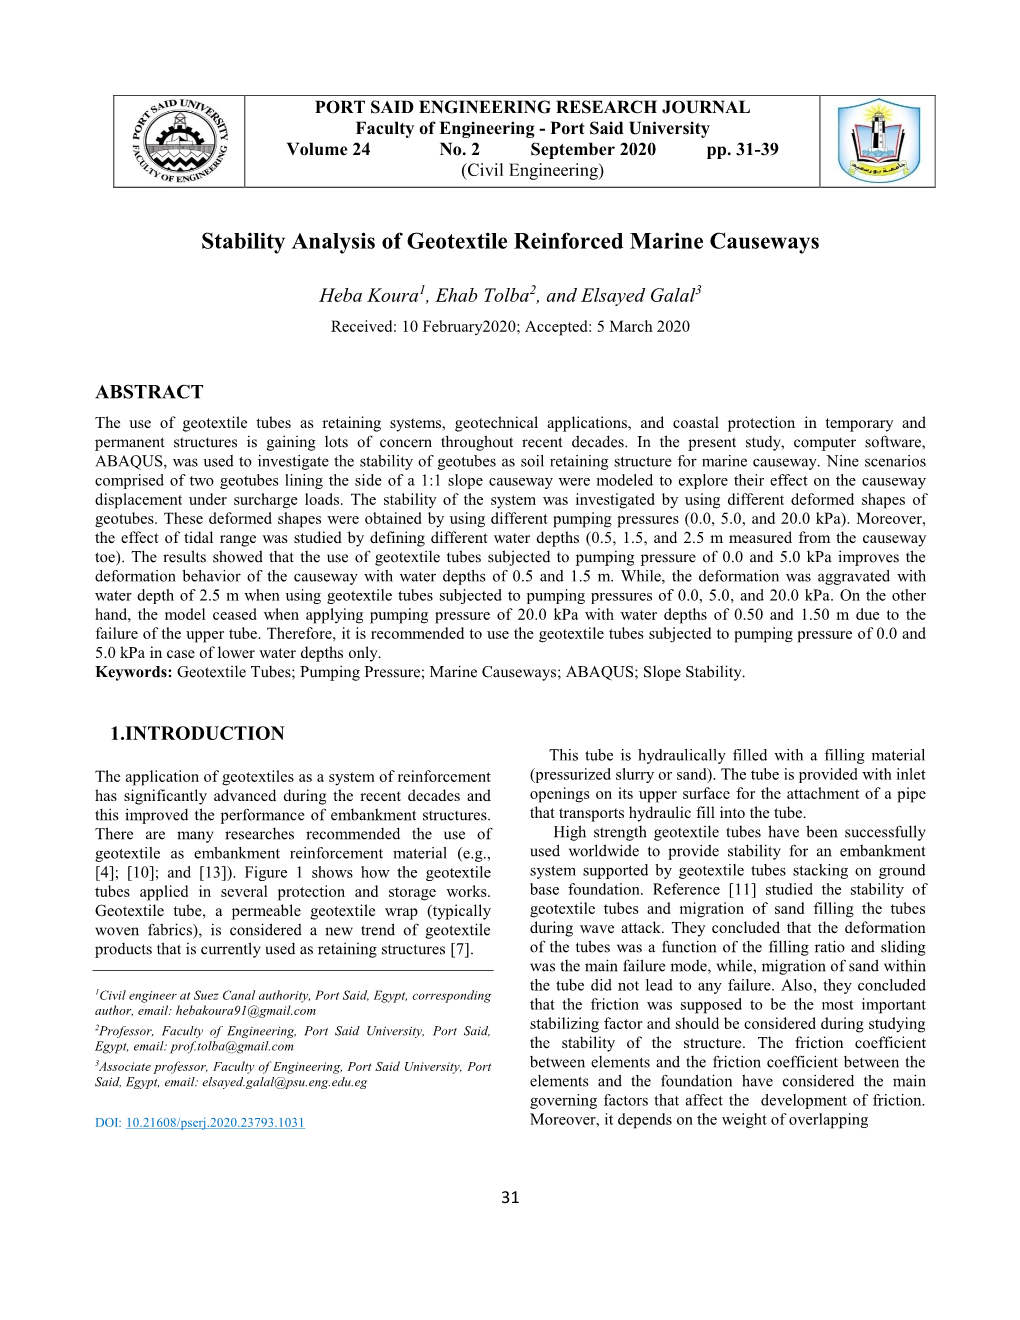 Stability Analysis of Geotextile Reinforced Marine Causeways